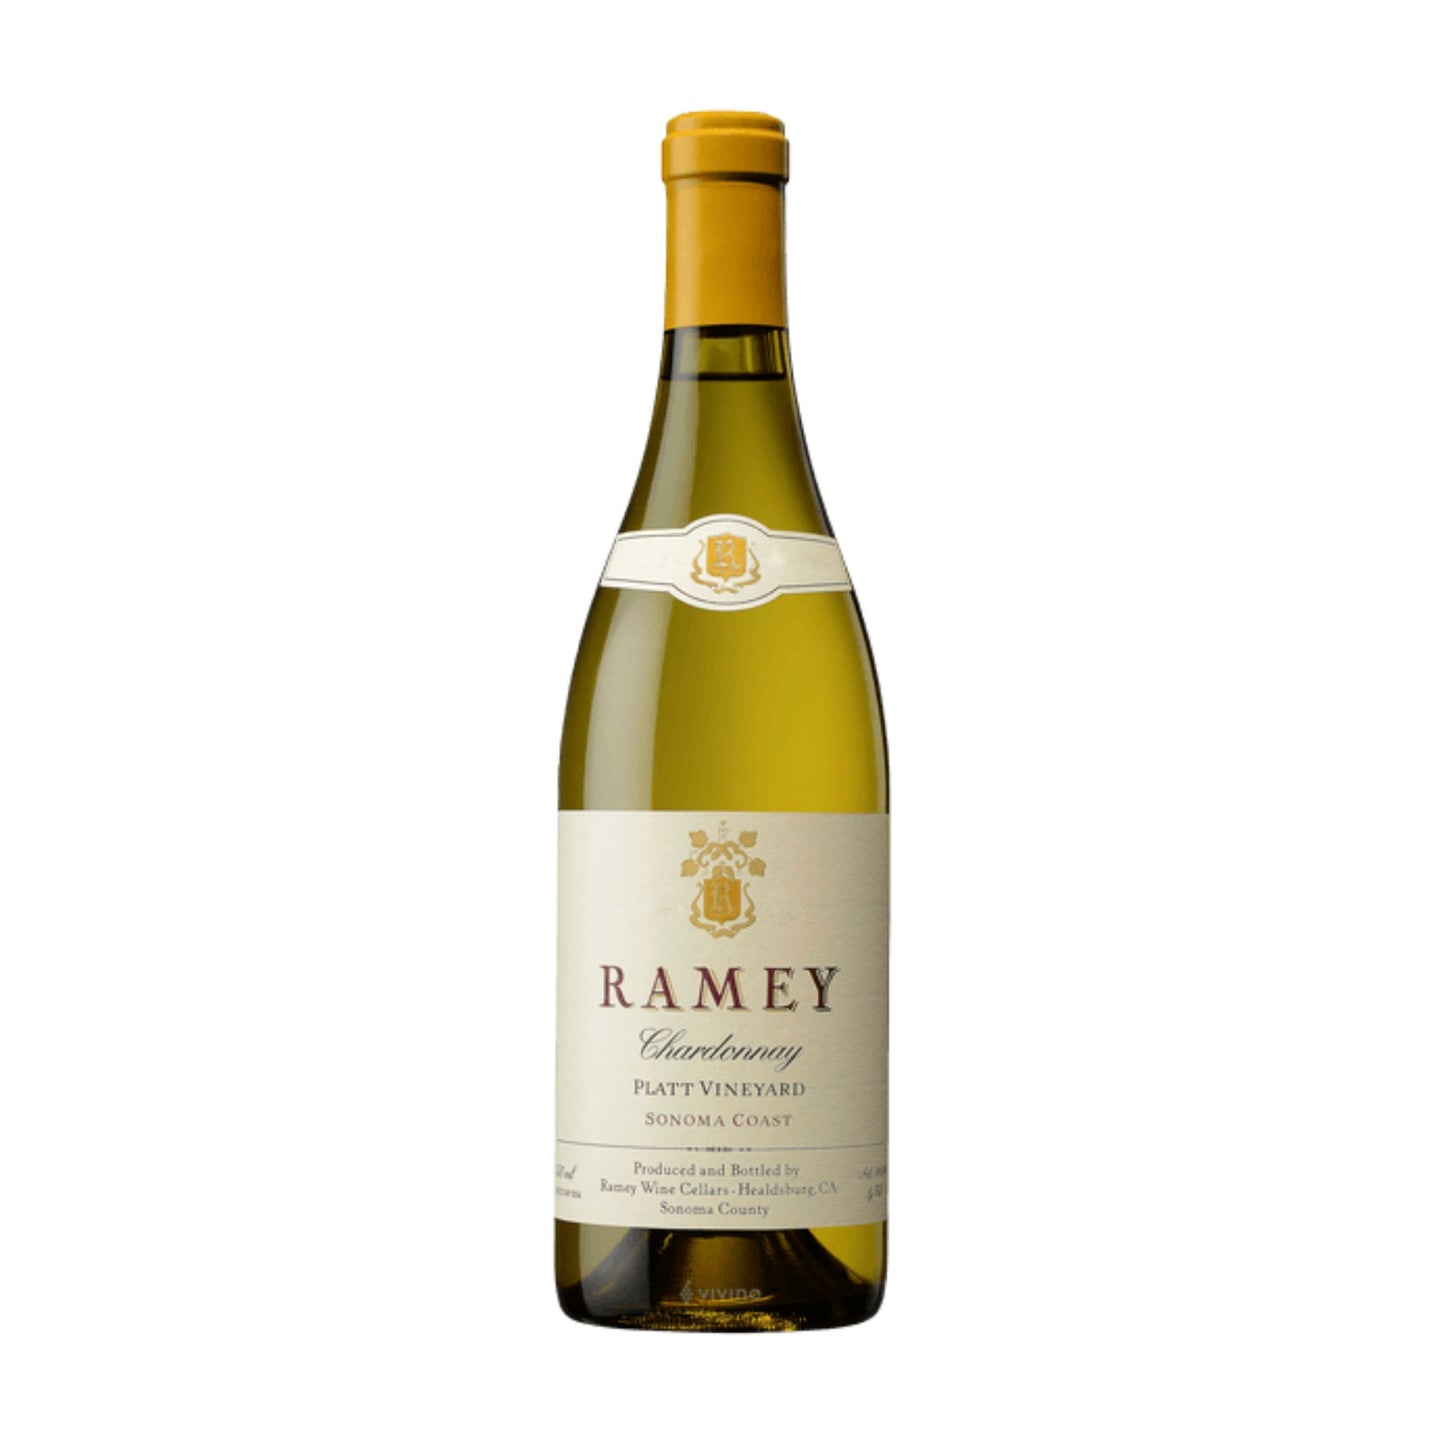 Ramey Chardonnay "Platt Vineyard", Sonoma Coast,2012